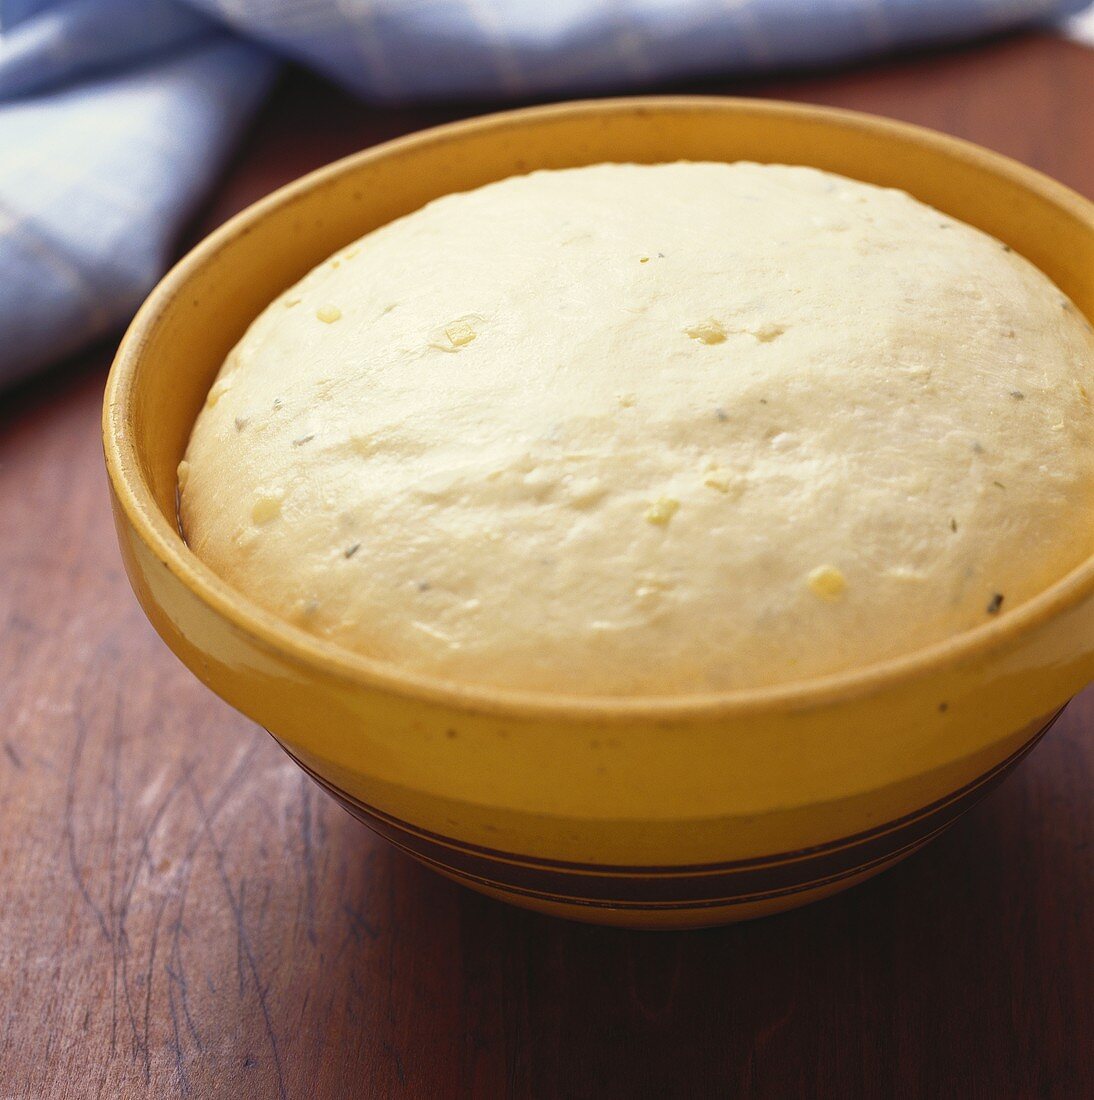 Dough Rising in a Bowl